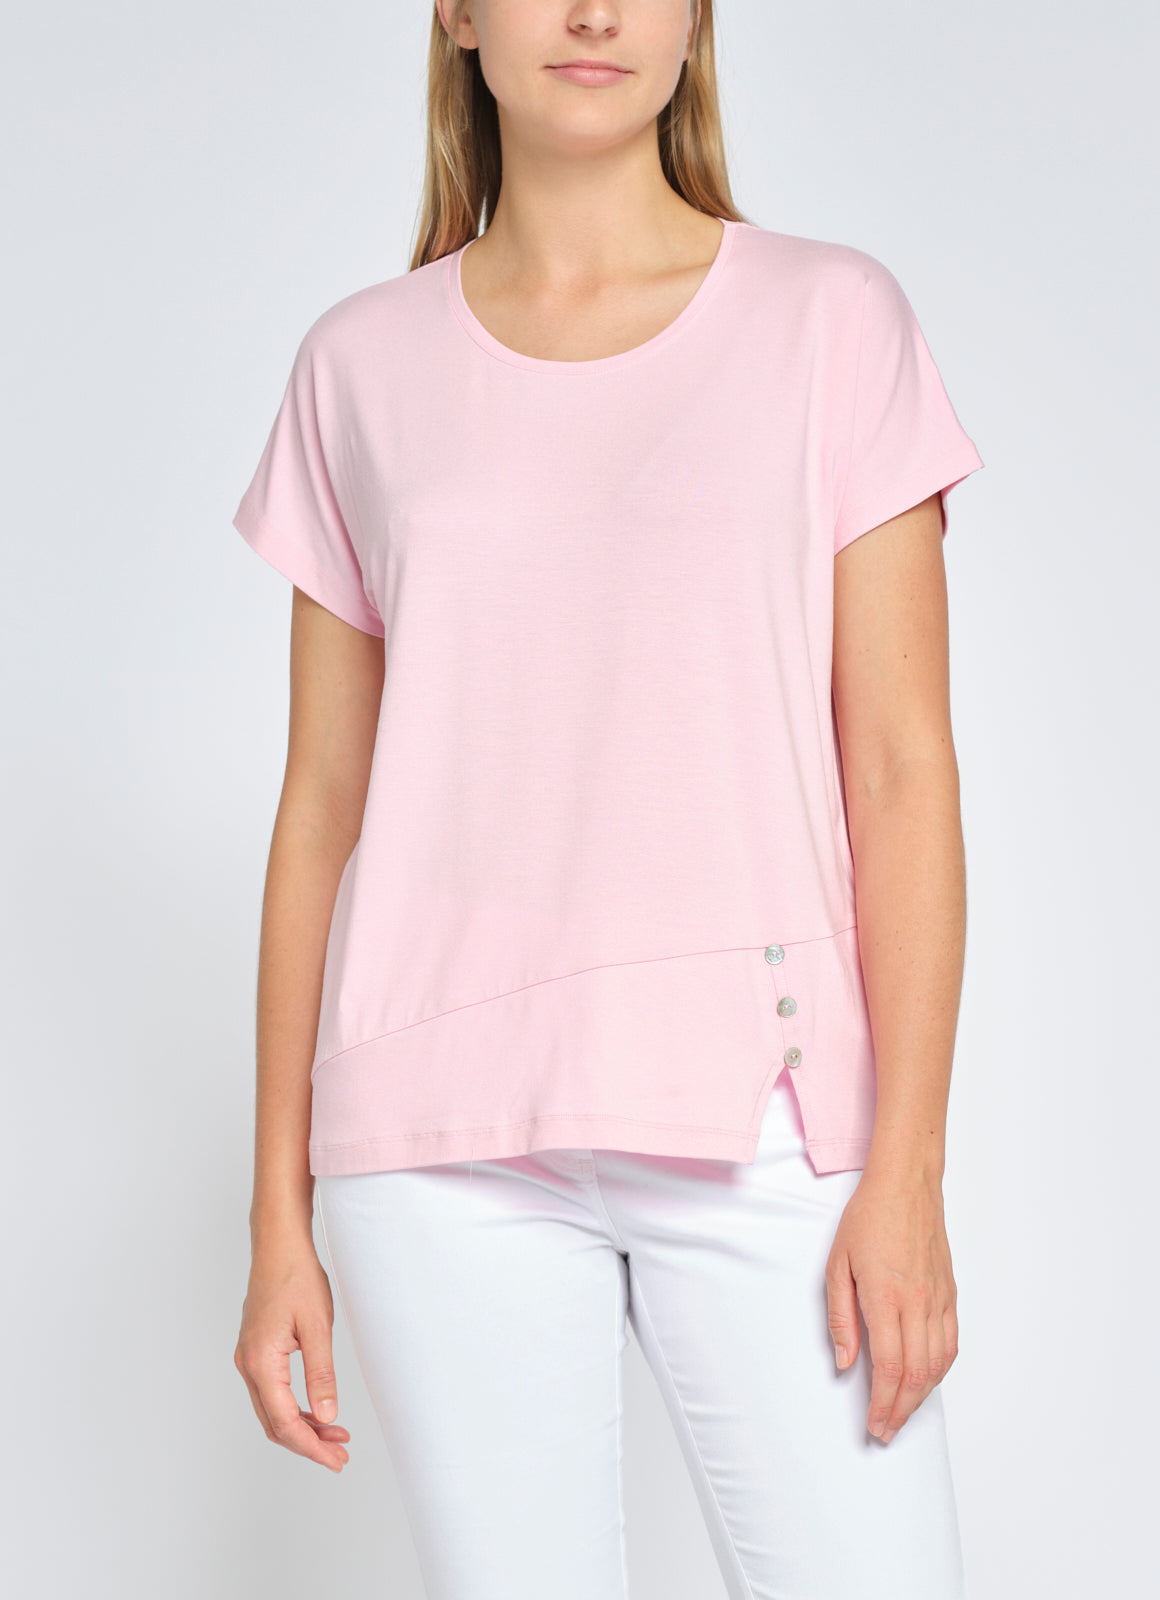 Candy Pink T-Shirt 23304